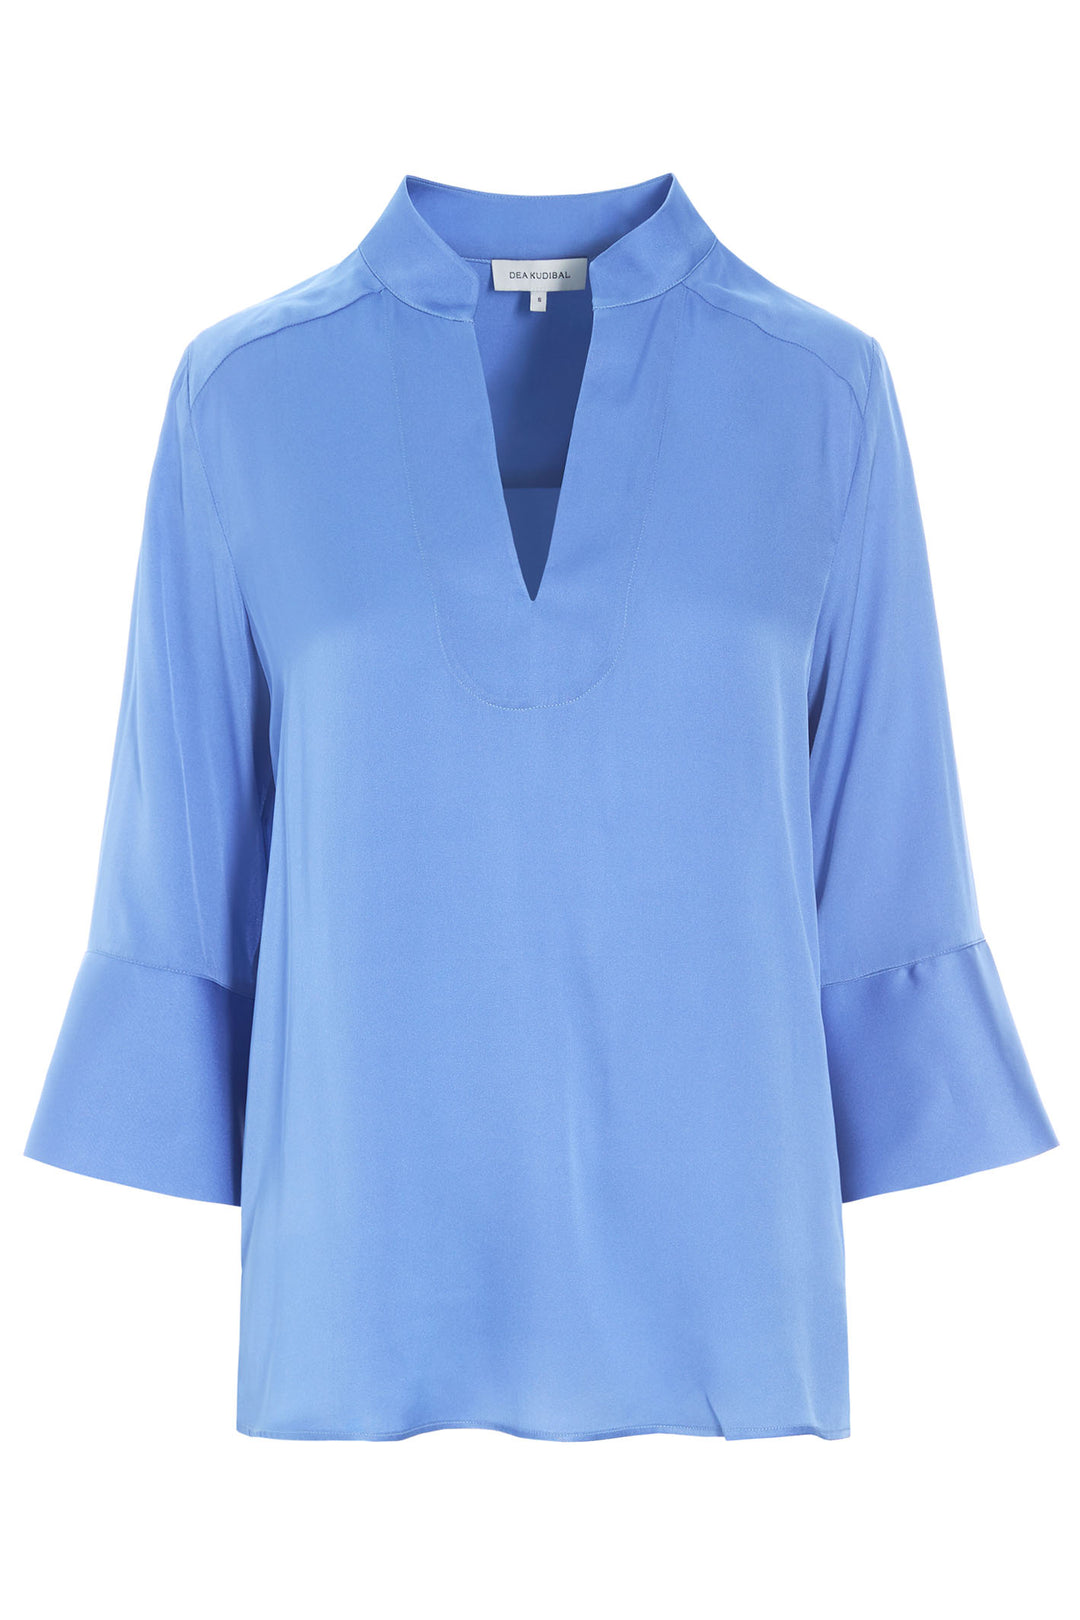 Dea Kudibal Lysannadea 1010124 2083 Air Blue Wide Sleeve Blouse - Olivia Grace Fashion